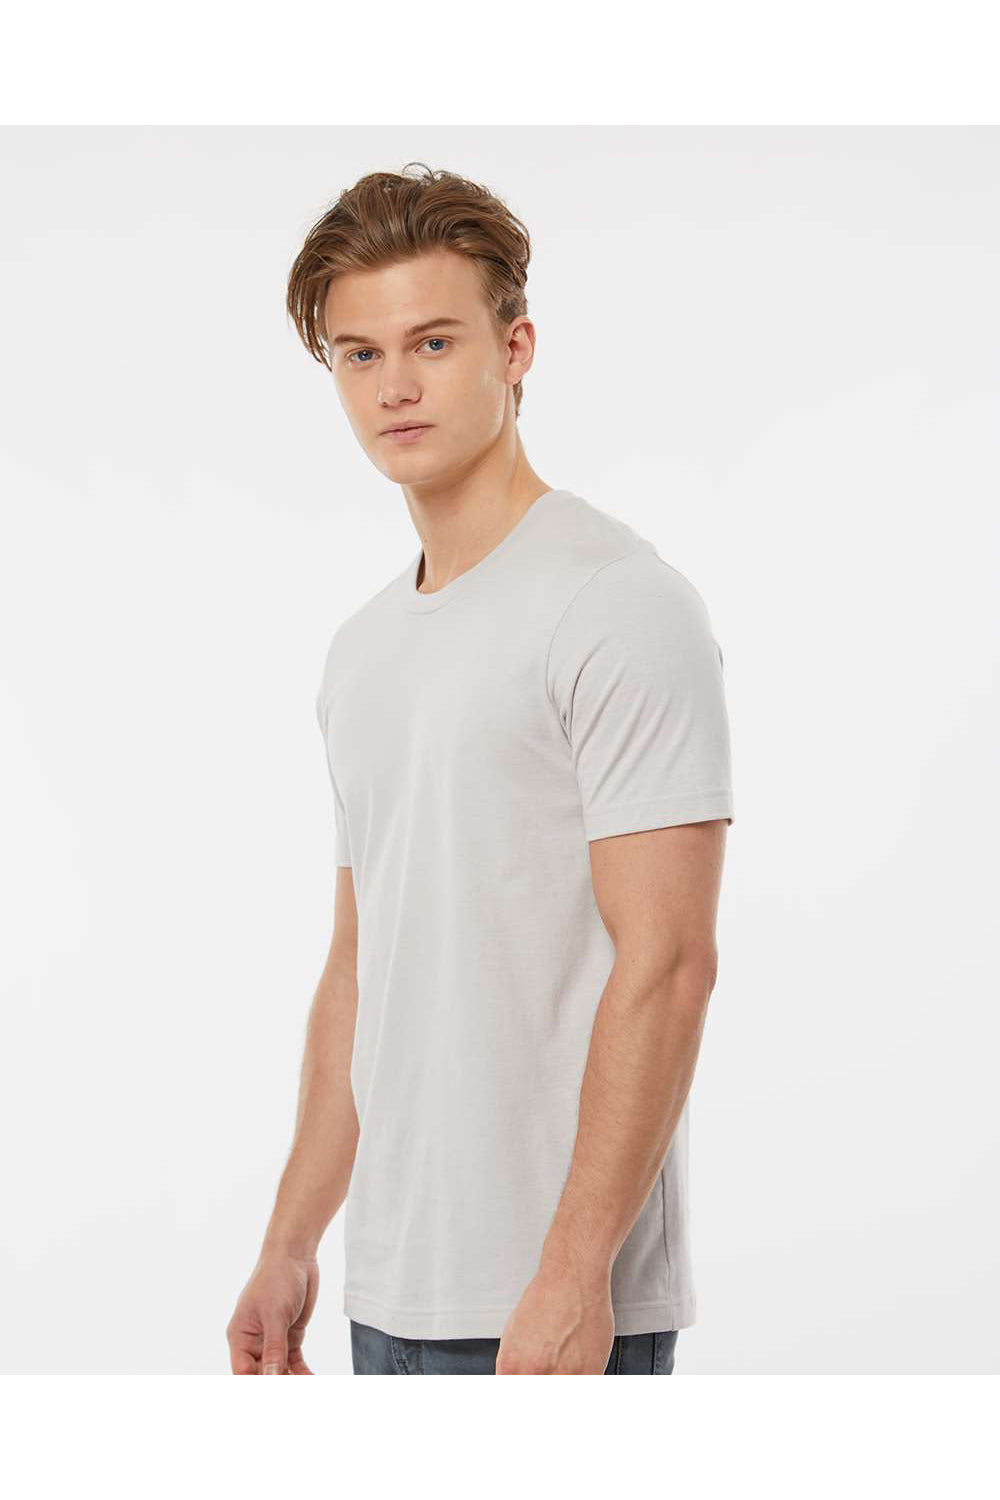 Tultex 502 Mens Premium Short Sleeve Crewneck T-Shirt Silver Grey Model Side